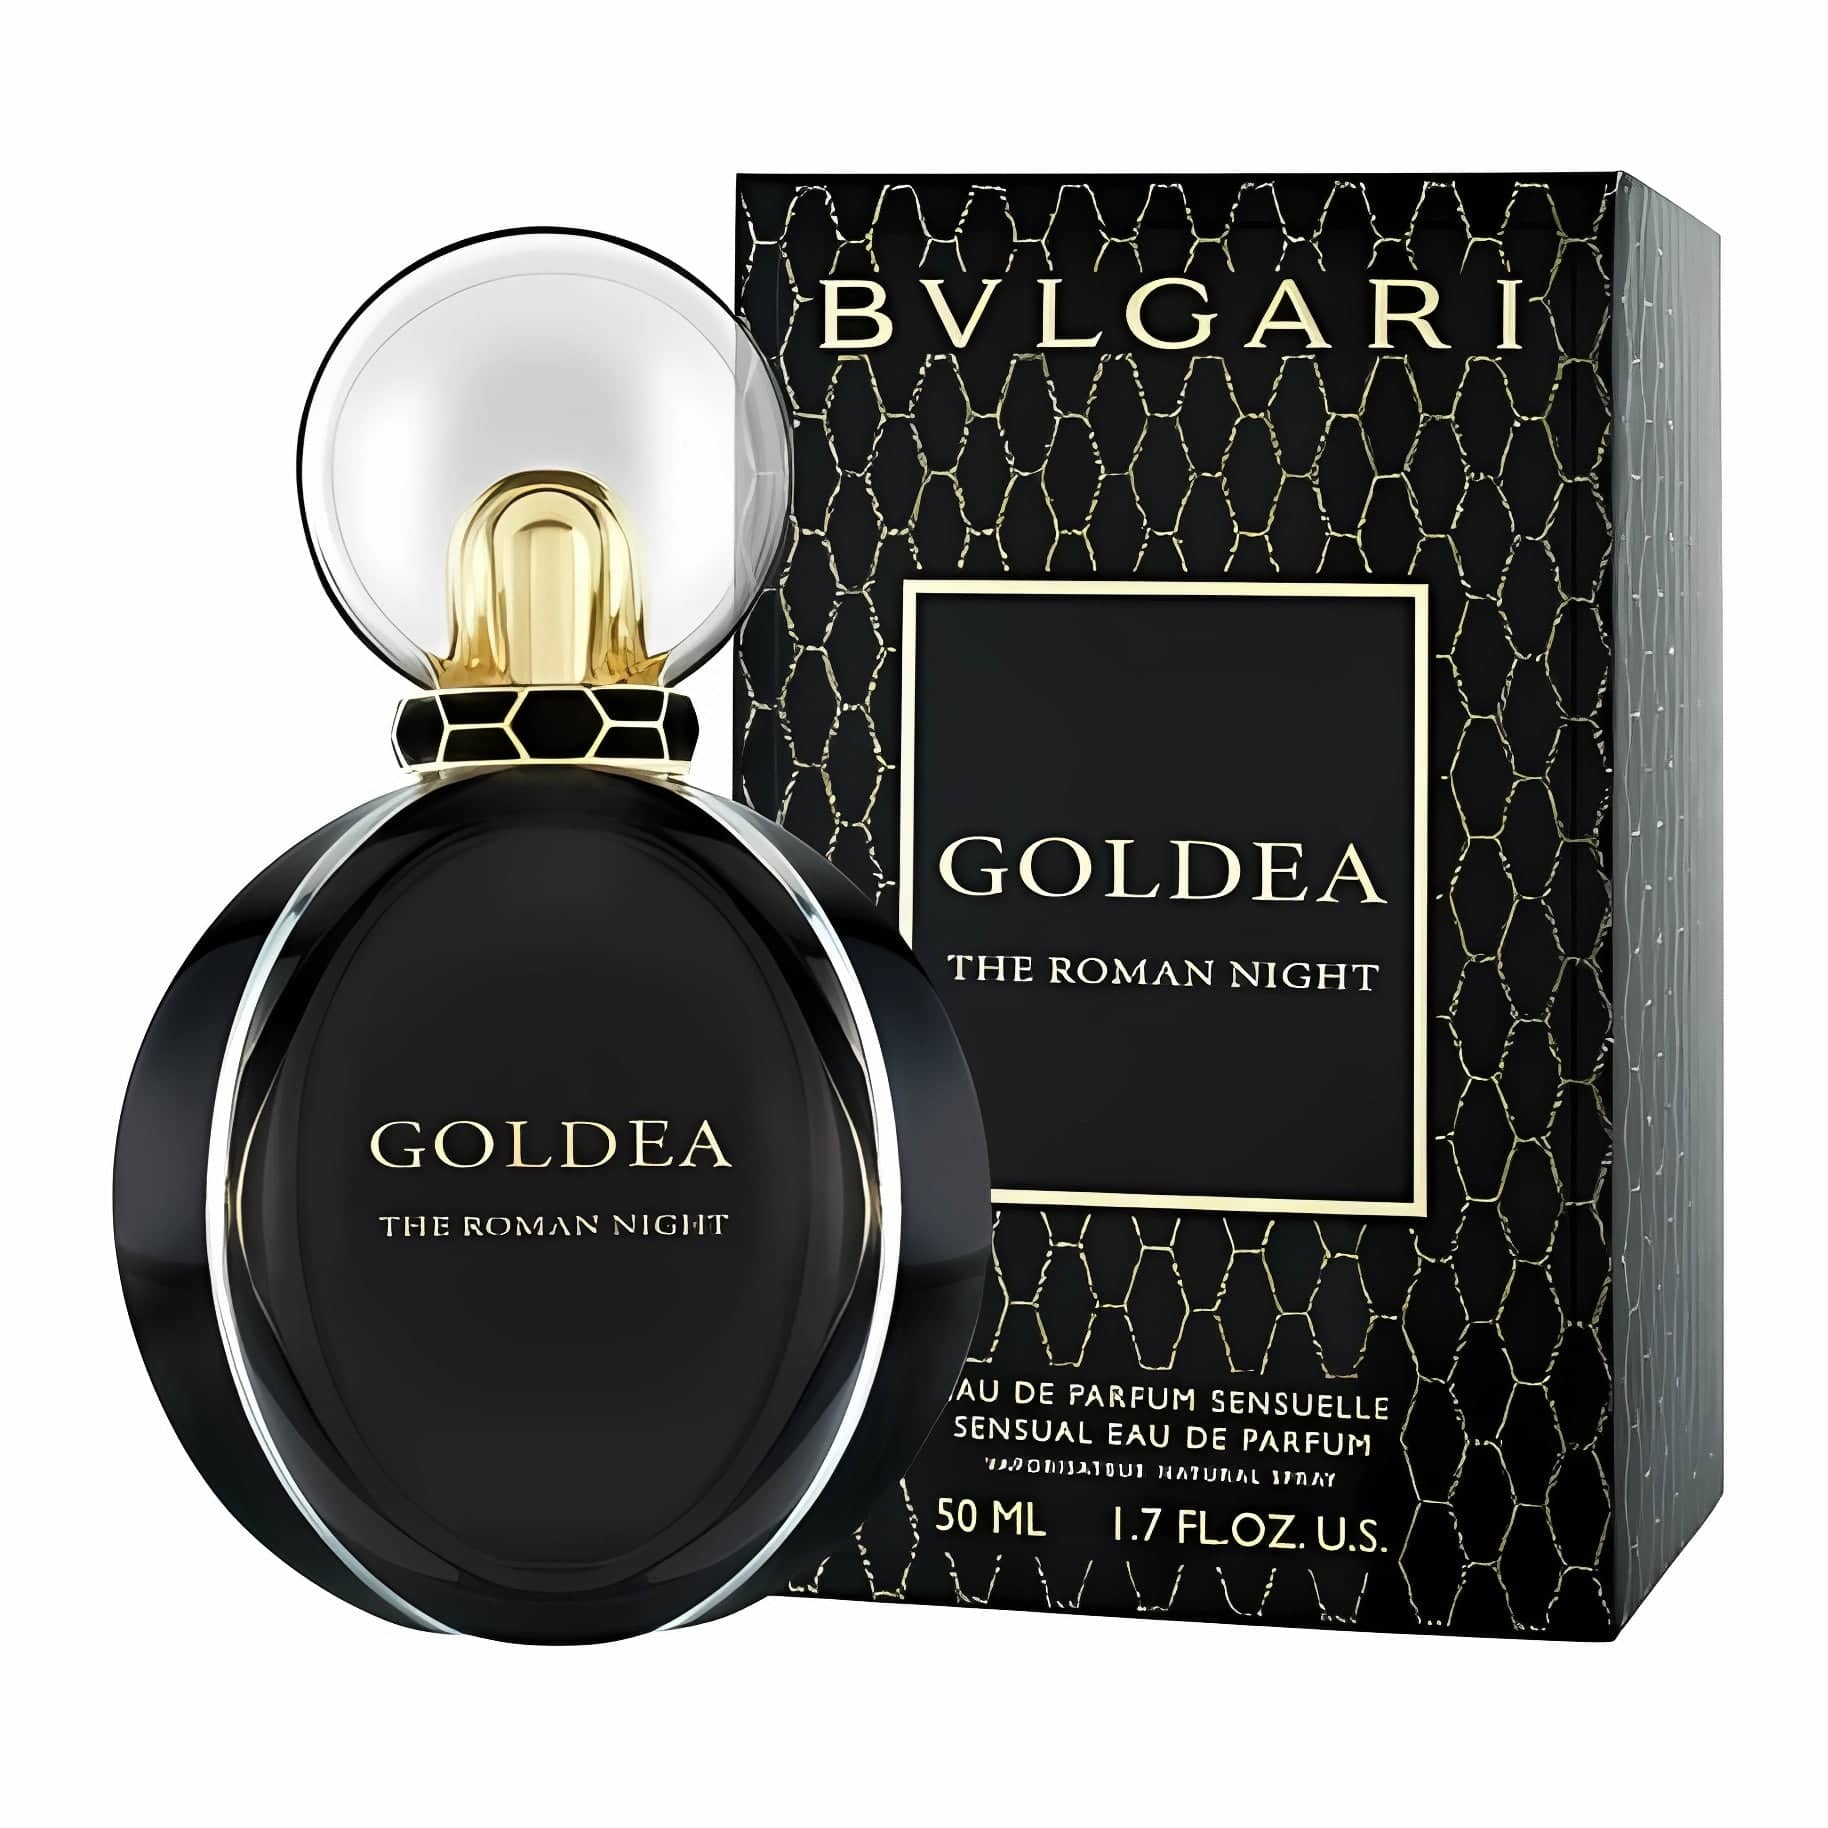 GOLDEA THE ROMAN NIGHT Eau de Parfum Eau de Parfum BVLGARI 50 ml  